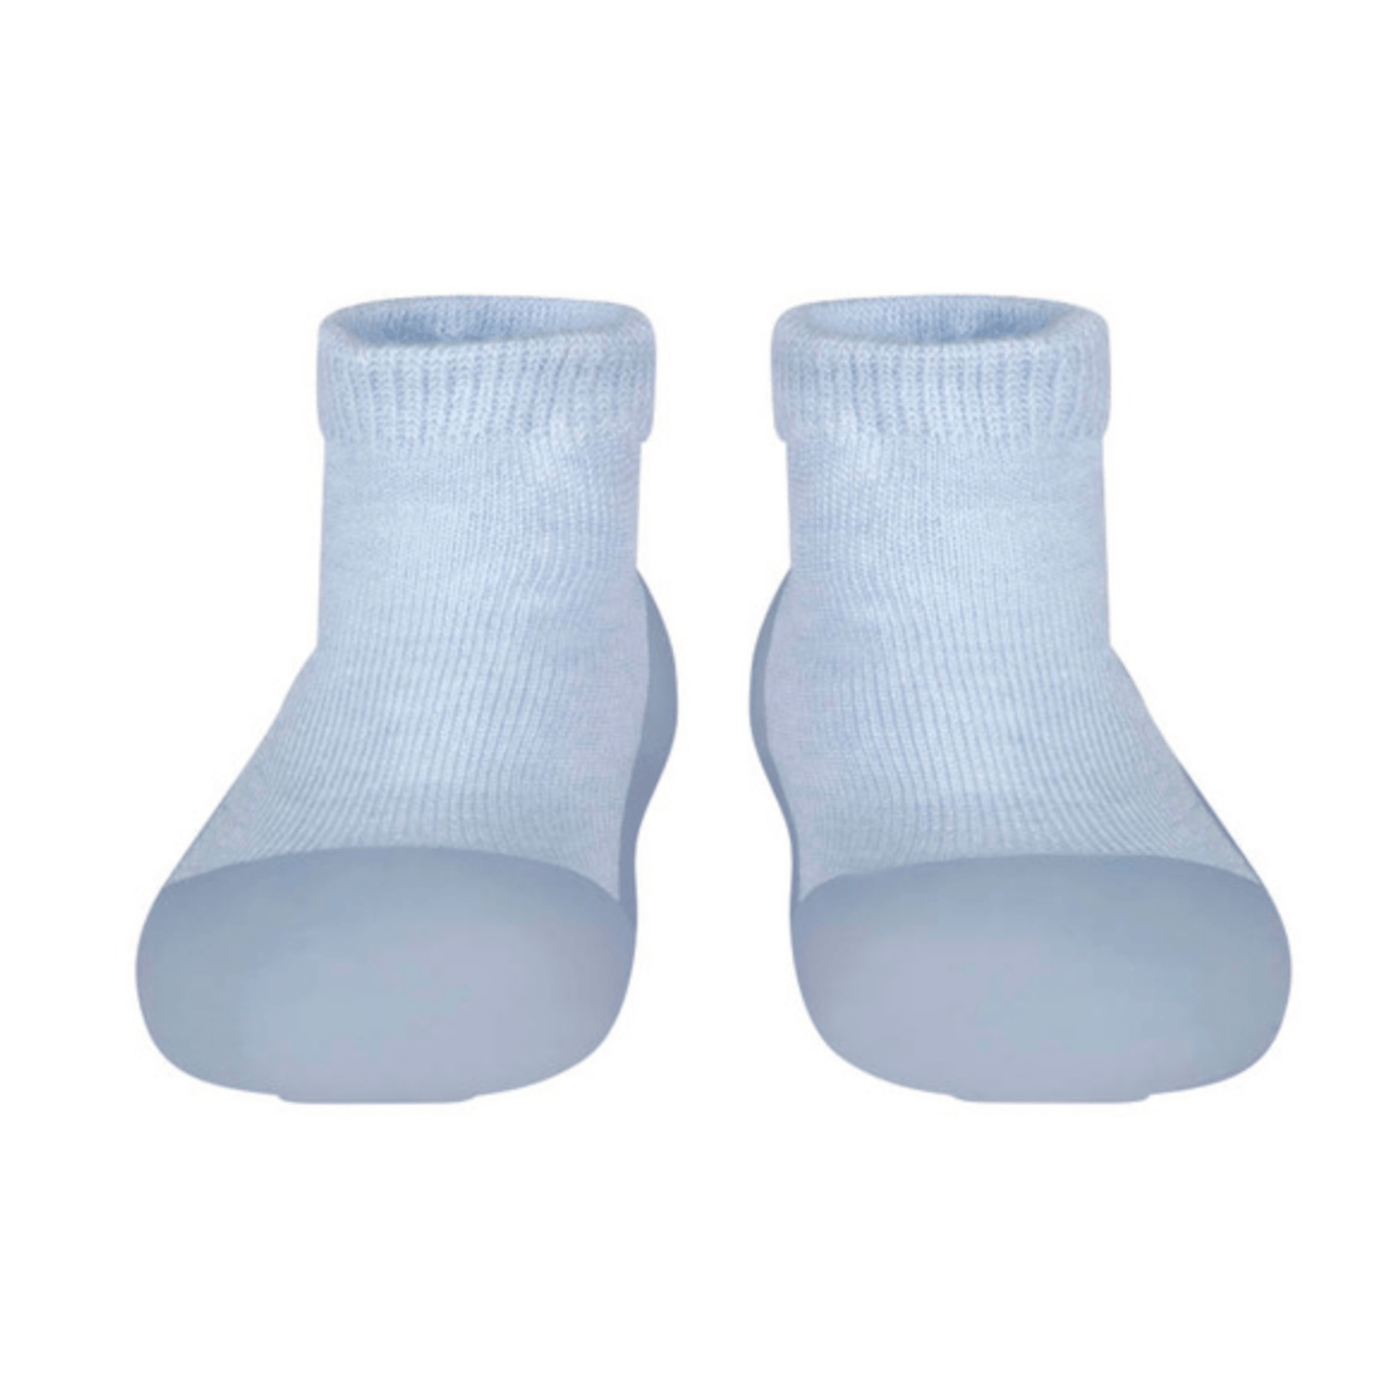 Toshi Organic Hybrid Rubber Sole Socks Dreamtime Seabreeze